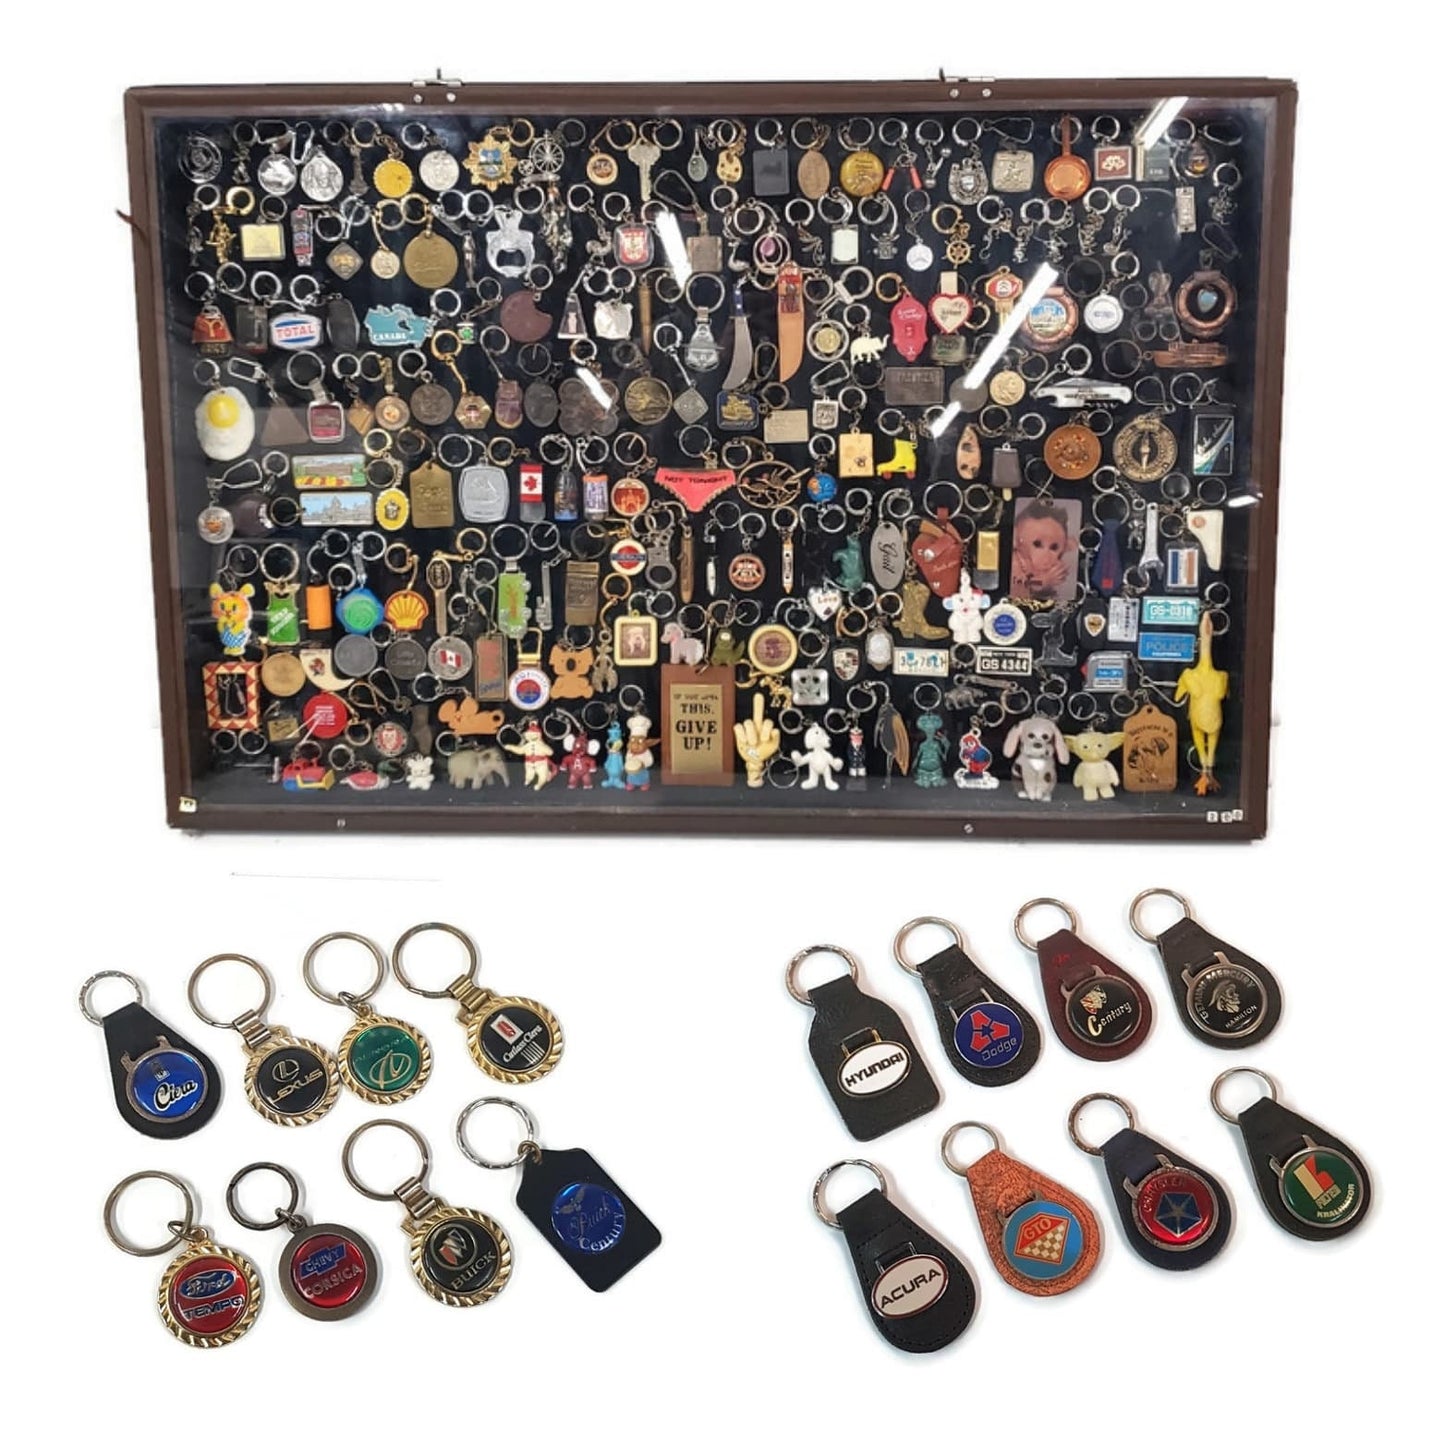 buick regal key chain keychain key fob keytag vintage automotove keychain gift collectible